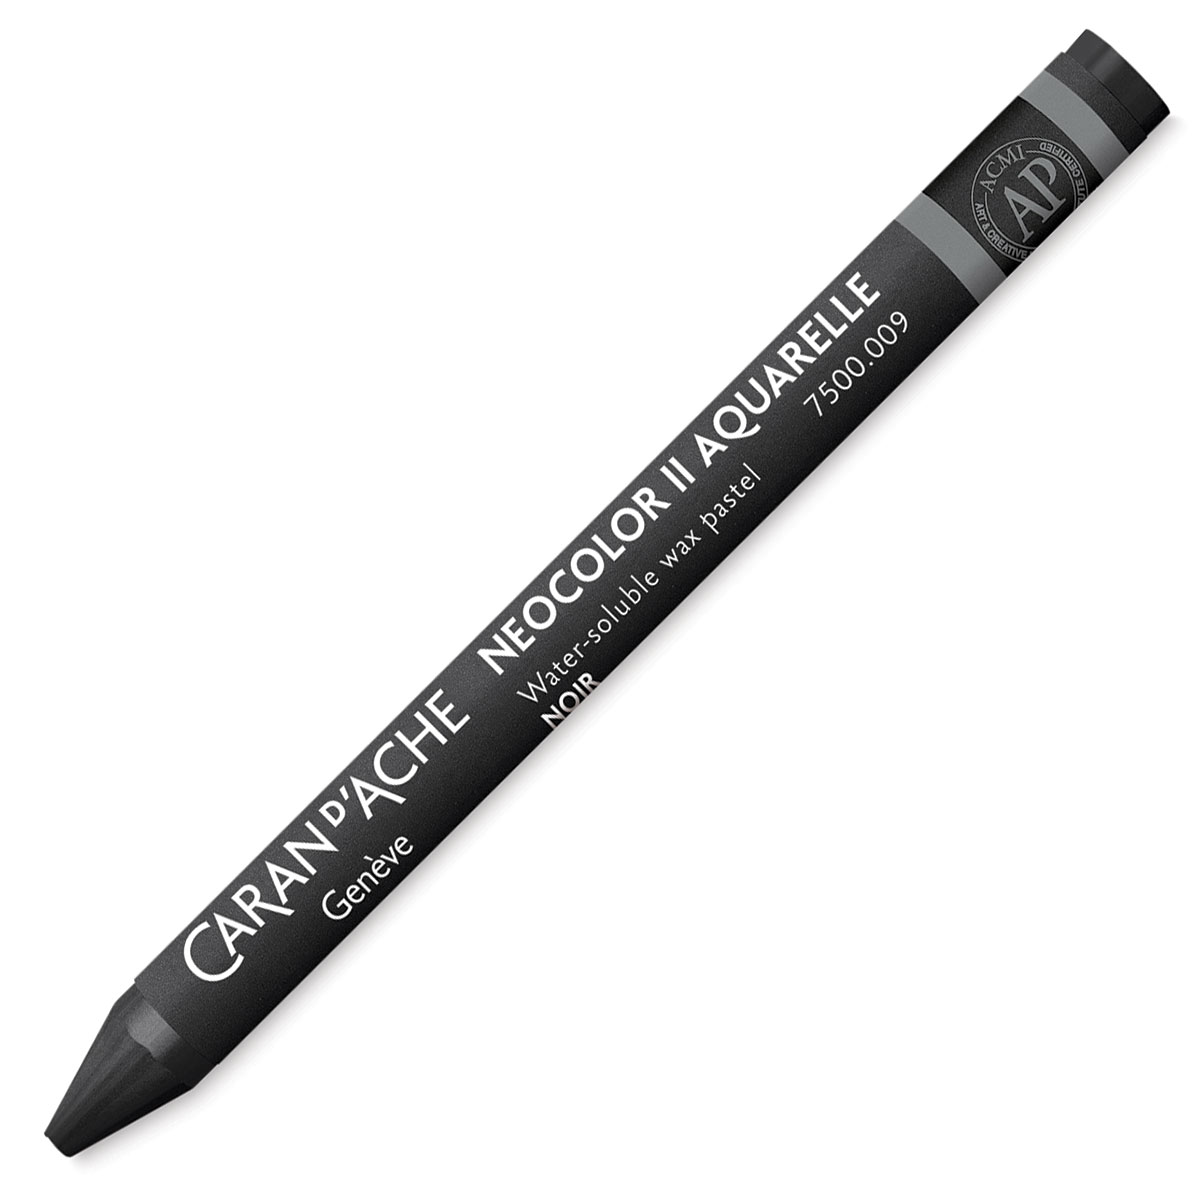 CaranD'Ache Neocolor II Watersoluble Crayons – Rileystreet Art Supply